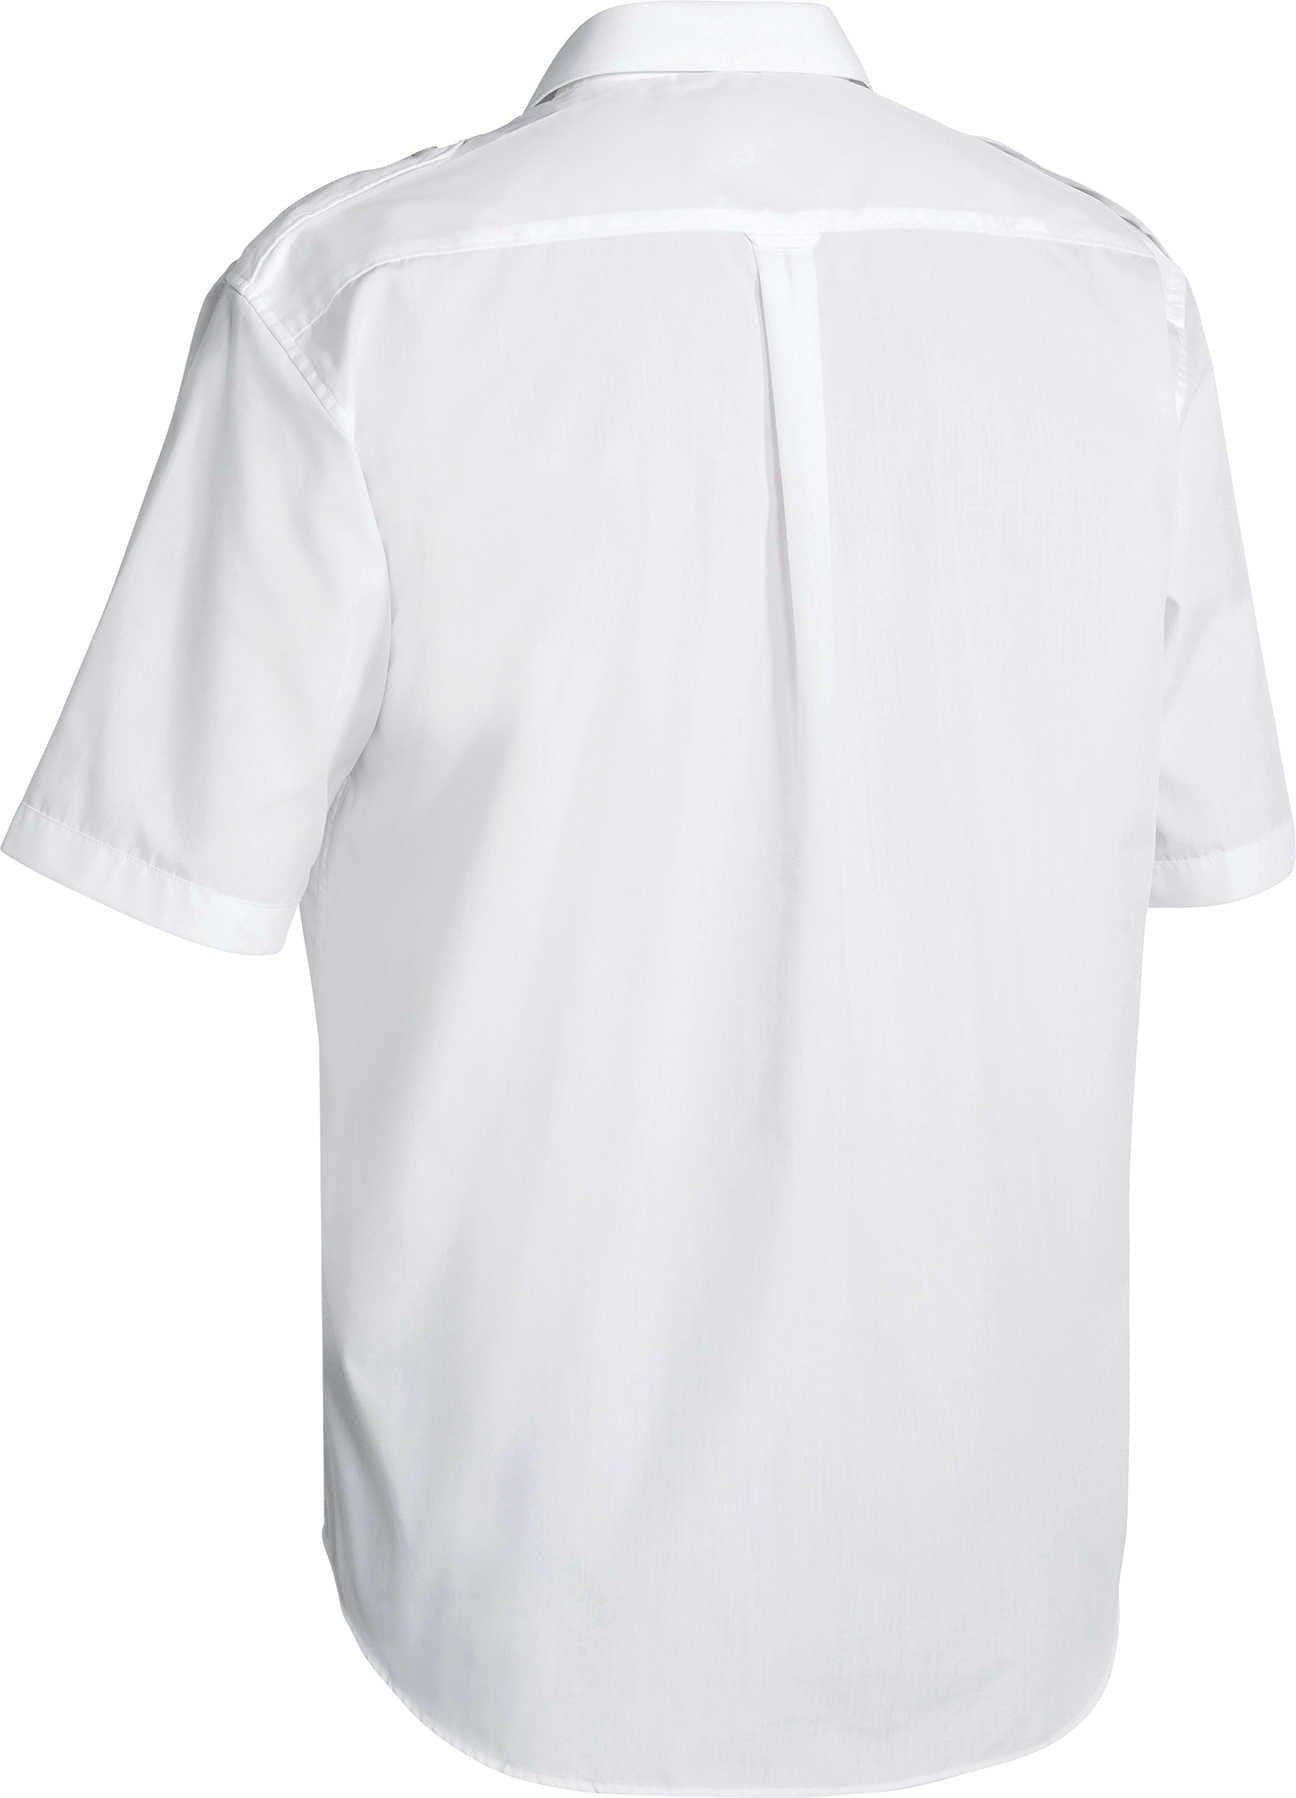 Bisley Epaulette Shirt - Short Sleeve - White (B71526) - Trade Wear